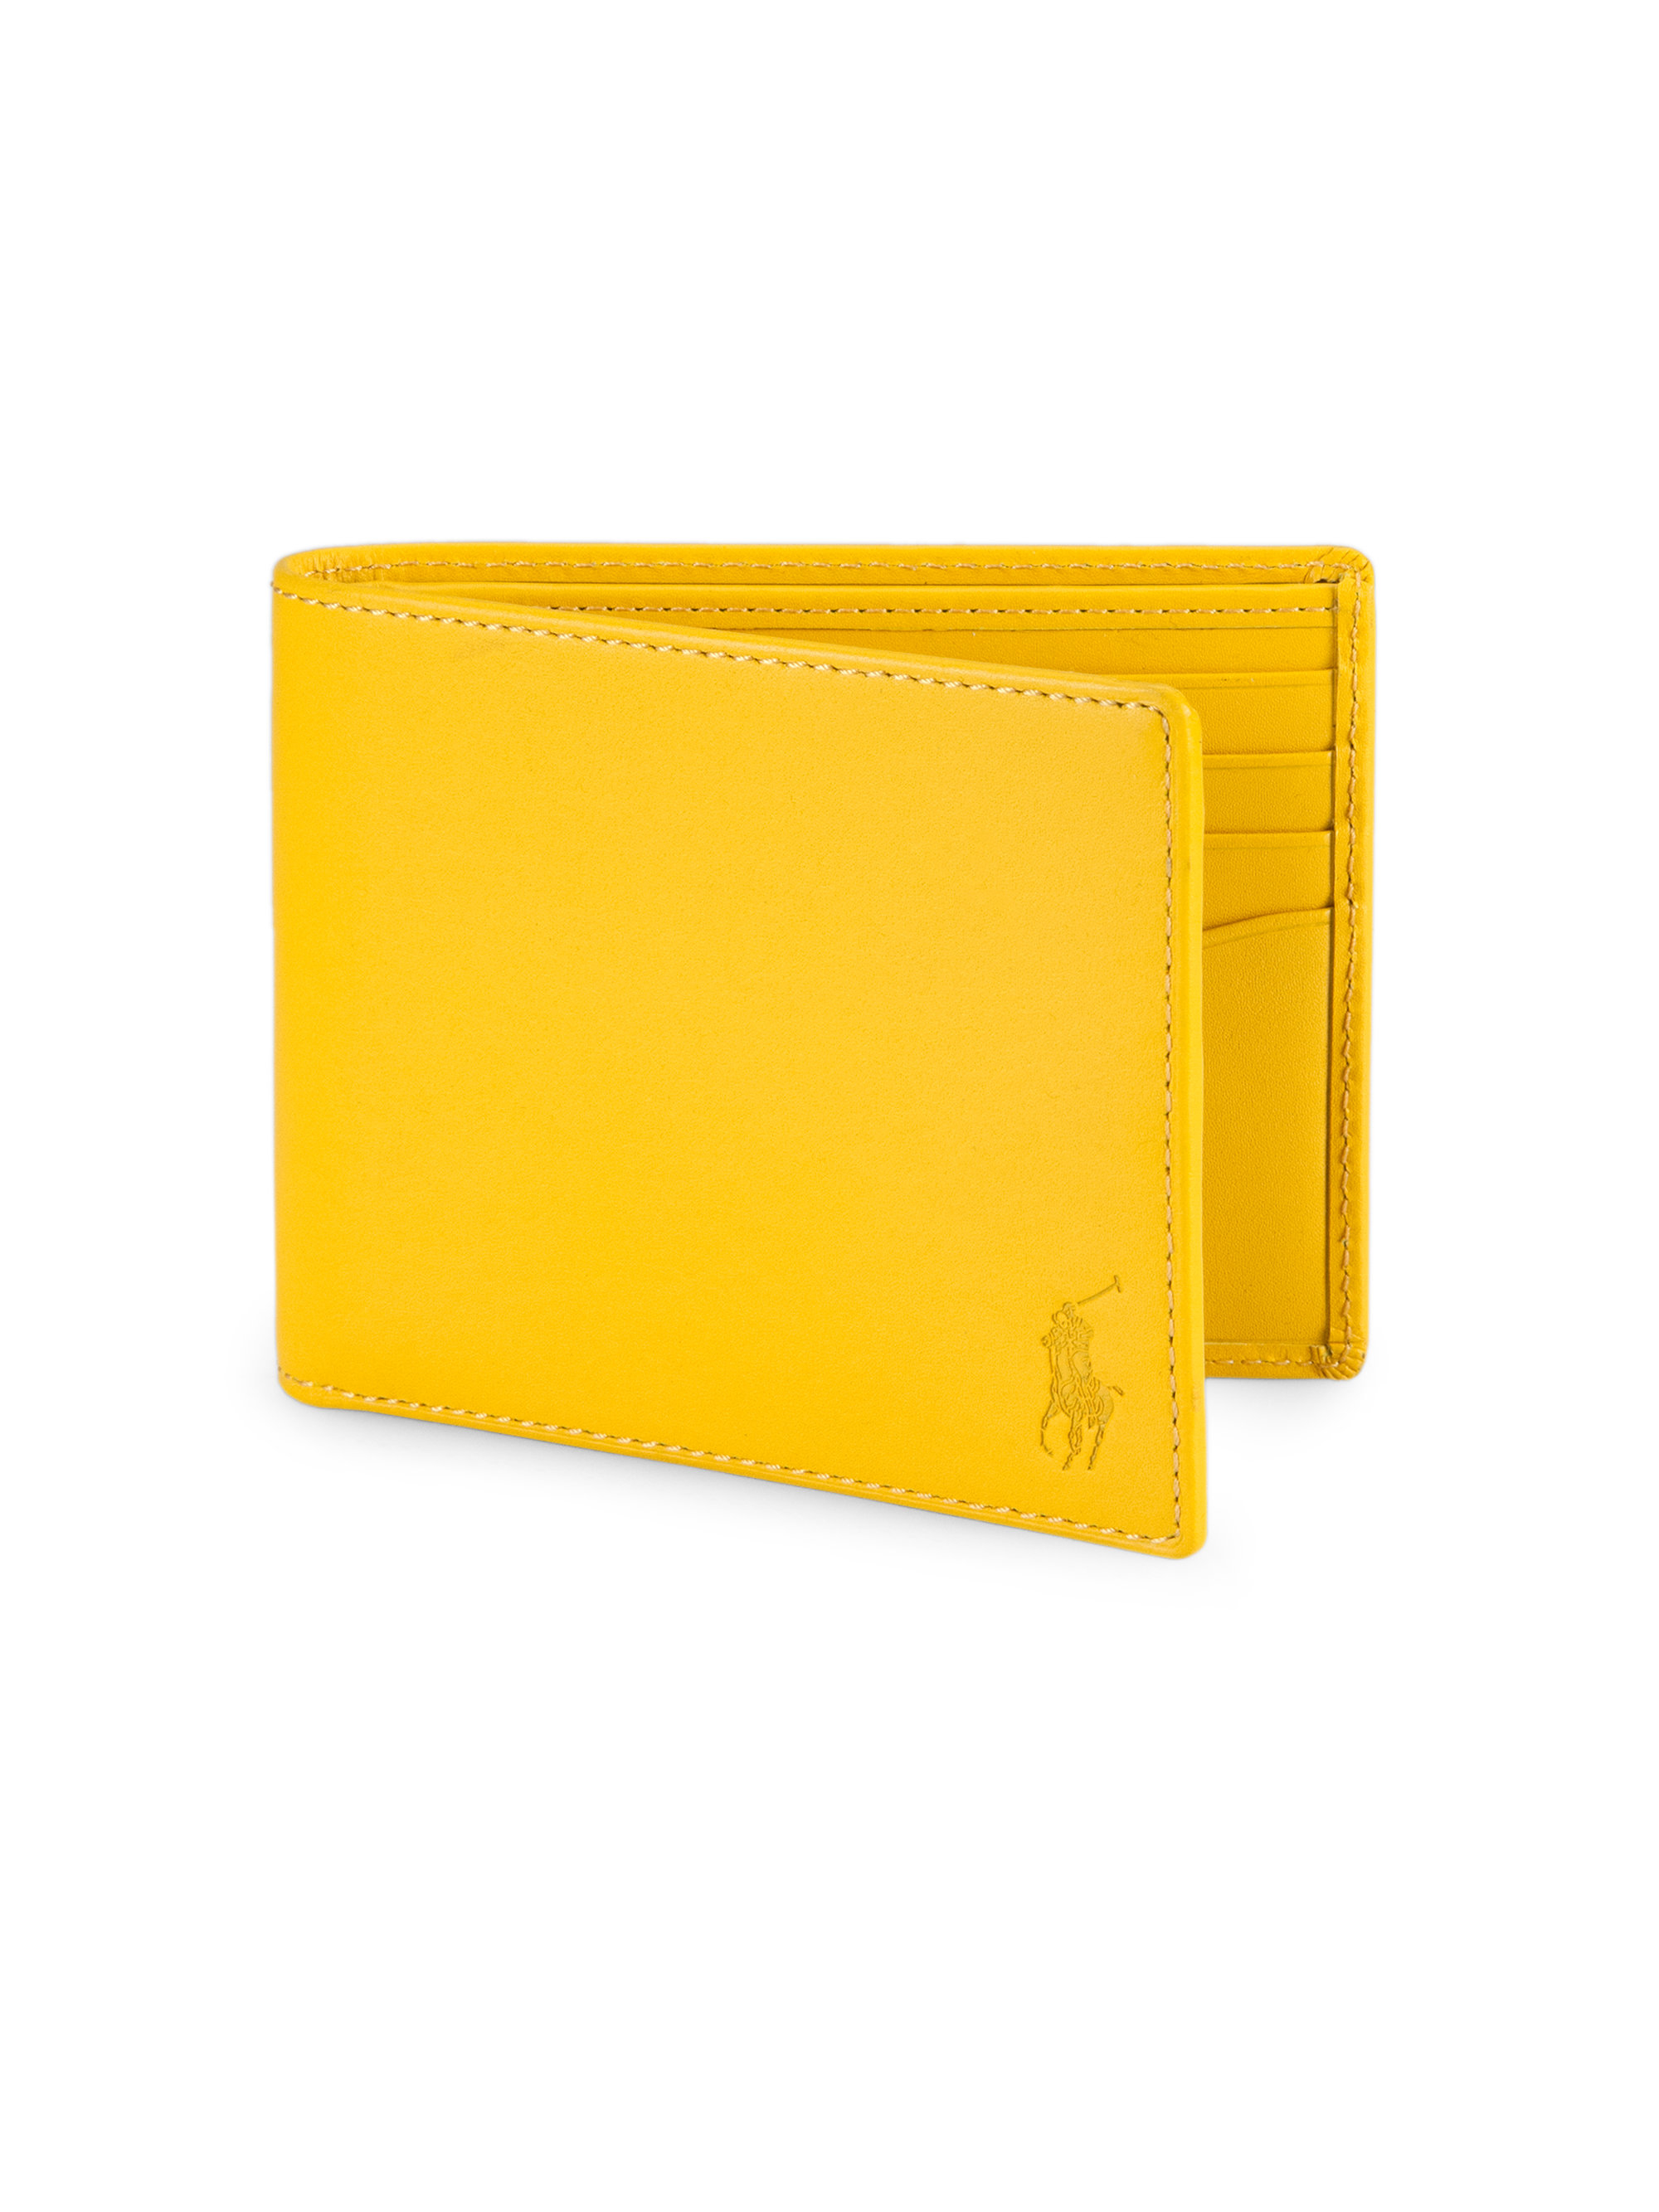 Polo Ralph Lauren Leather Billfold Wallet in Yellow for Men - Lyst